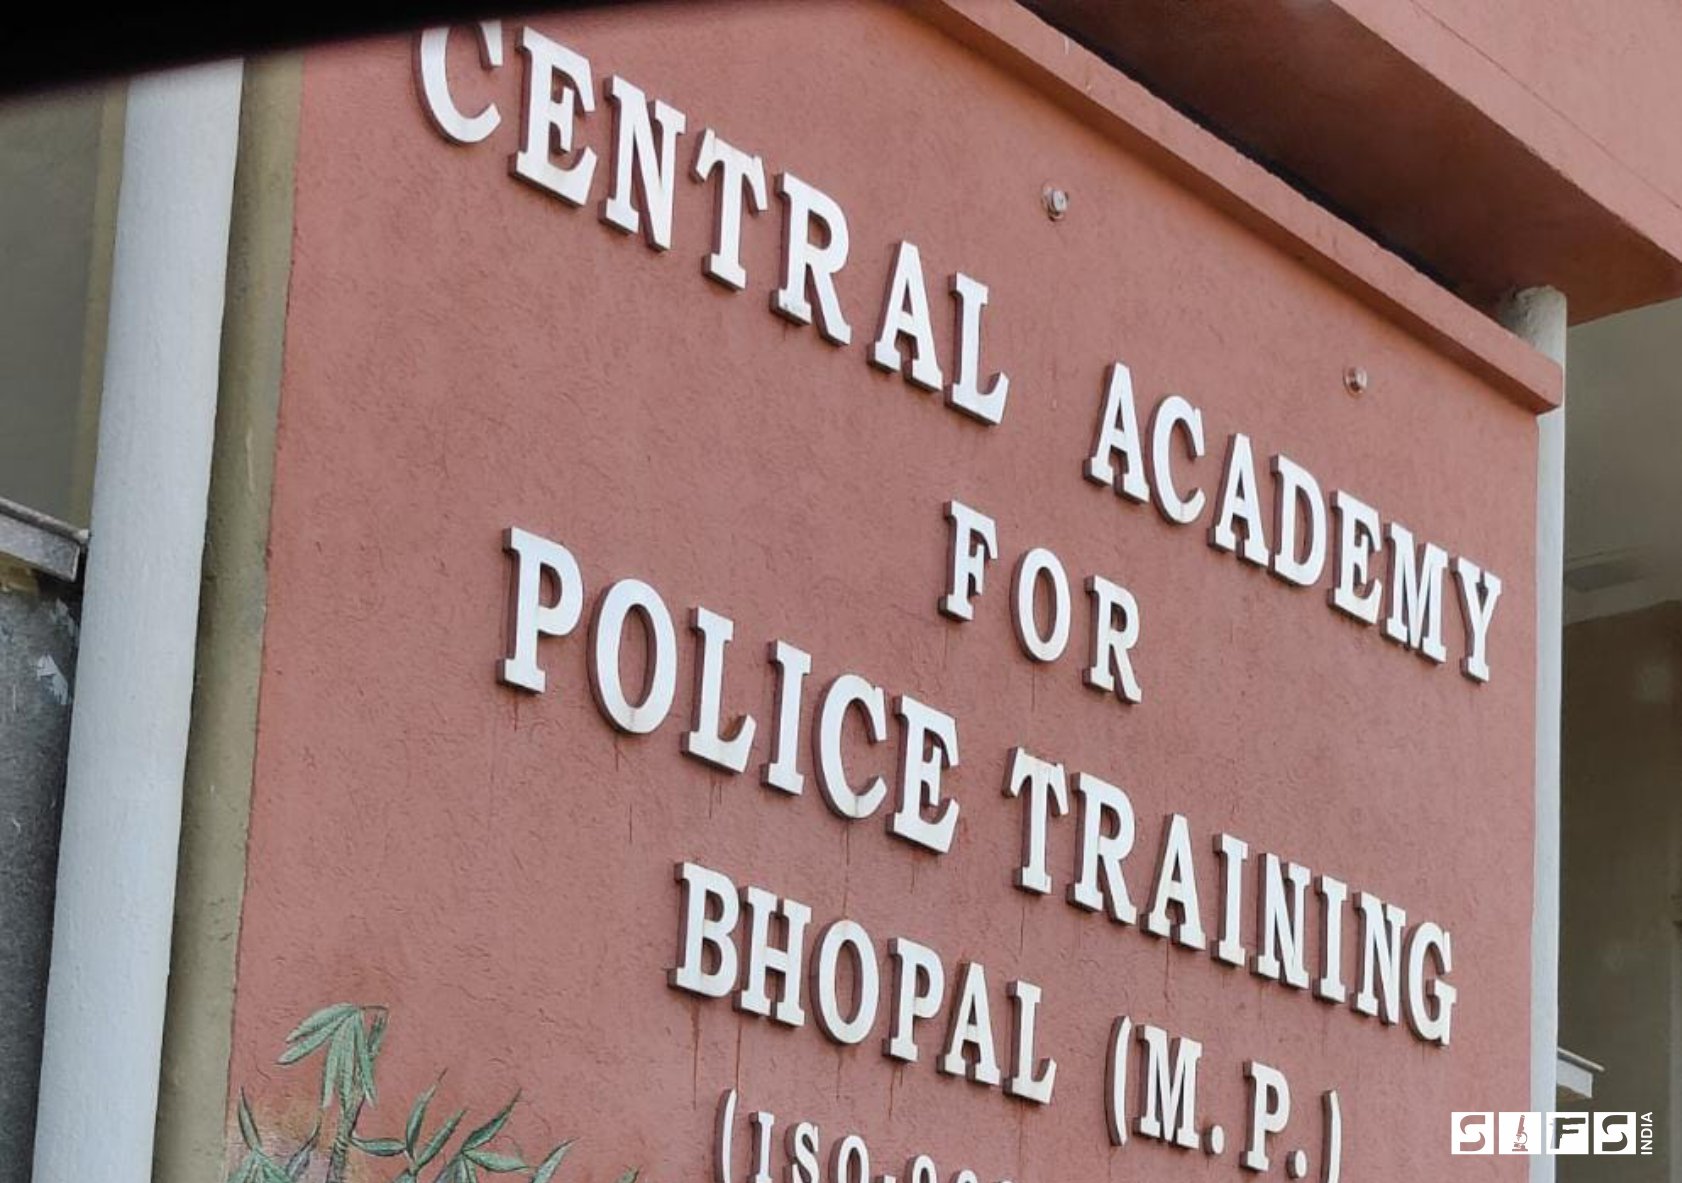 Police Training: DySP Officers, Batch 21 | CAPT, Bhopal